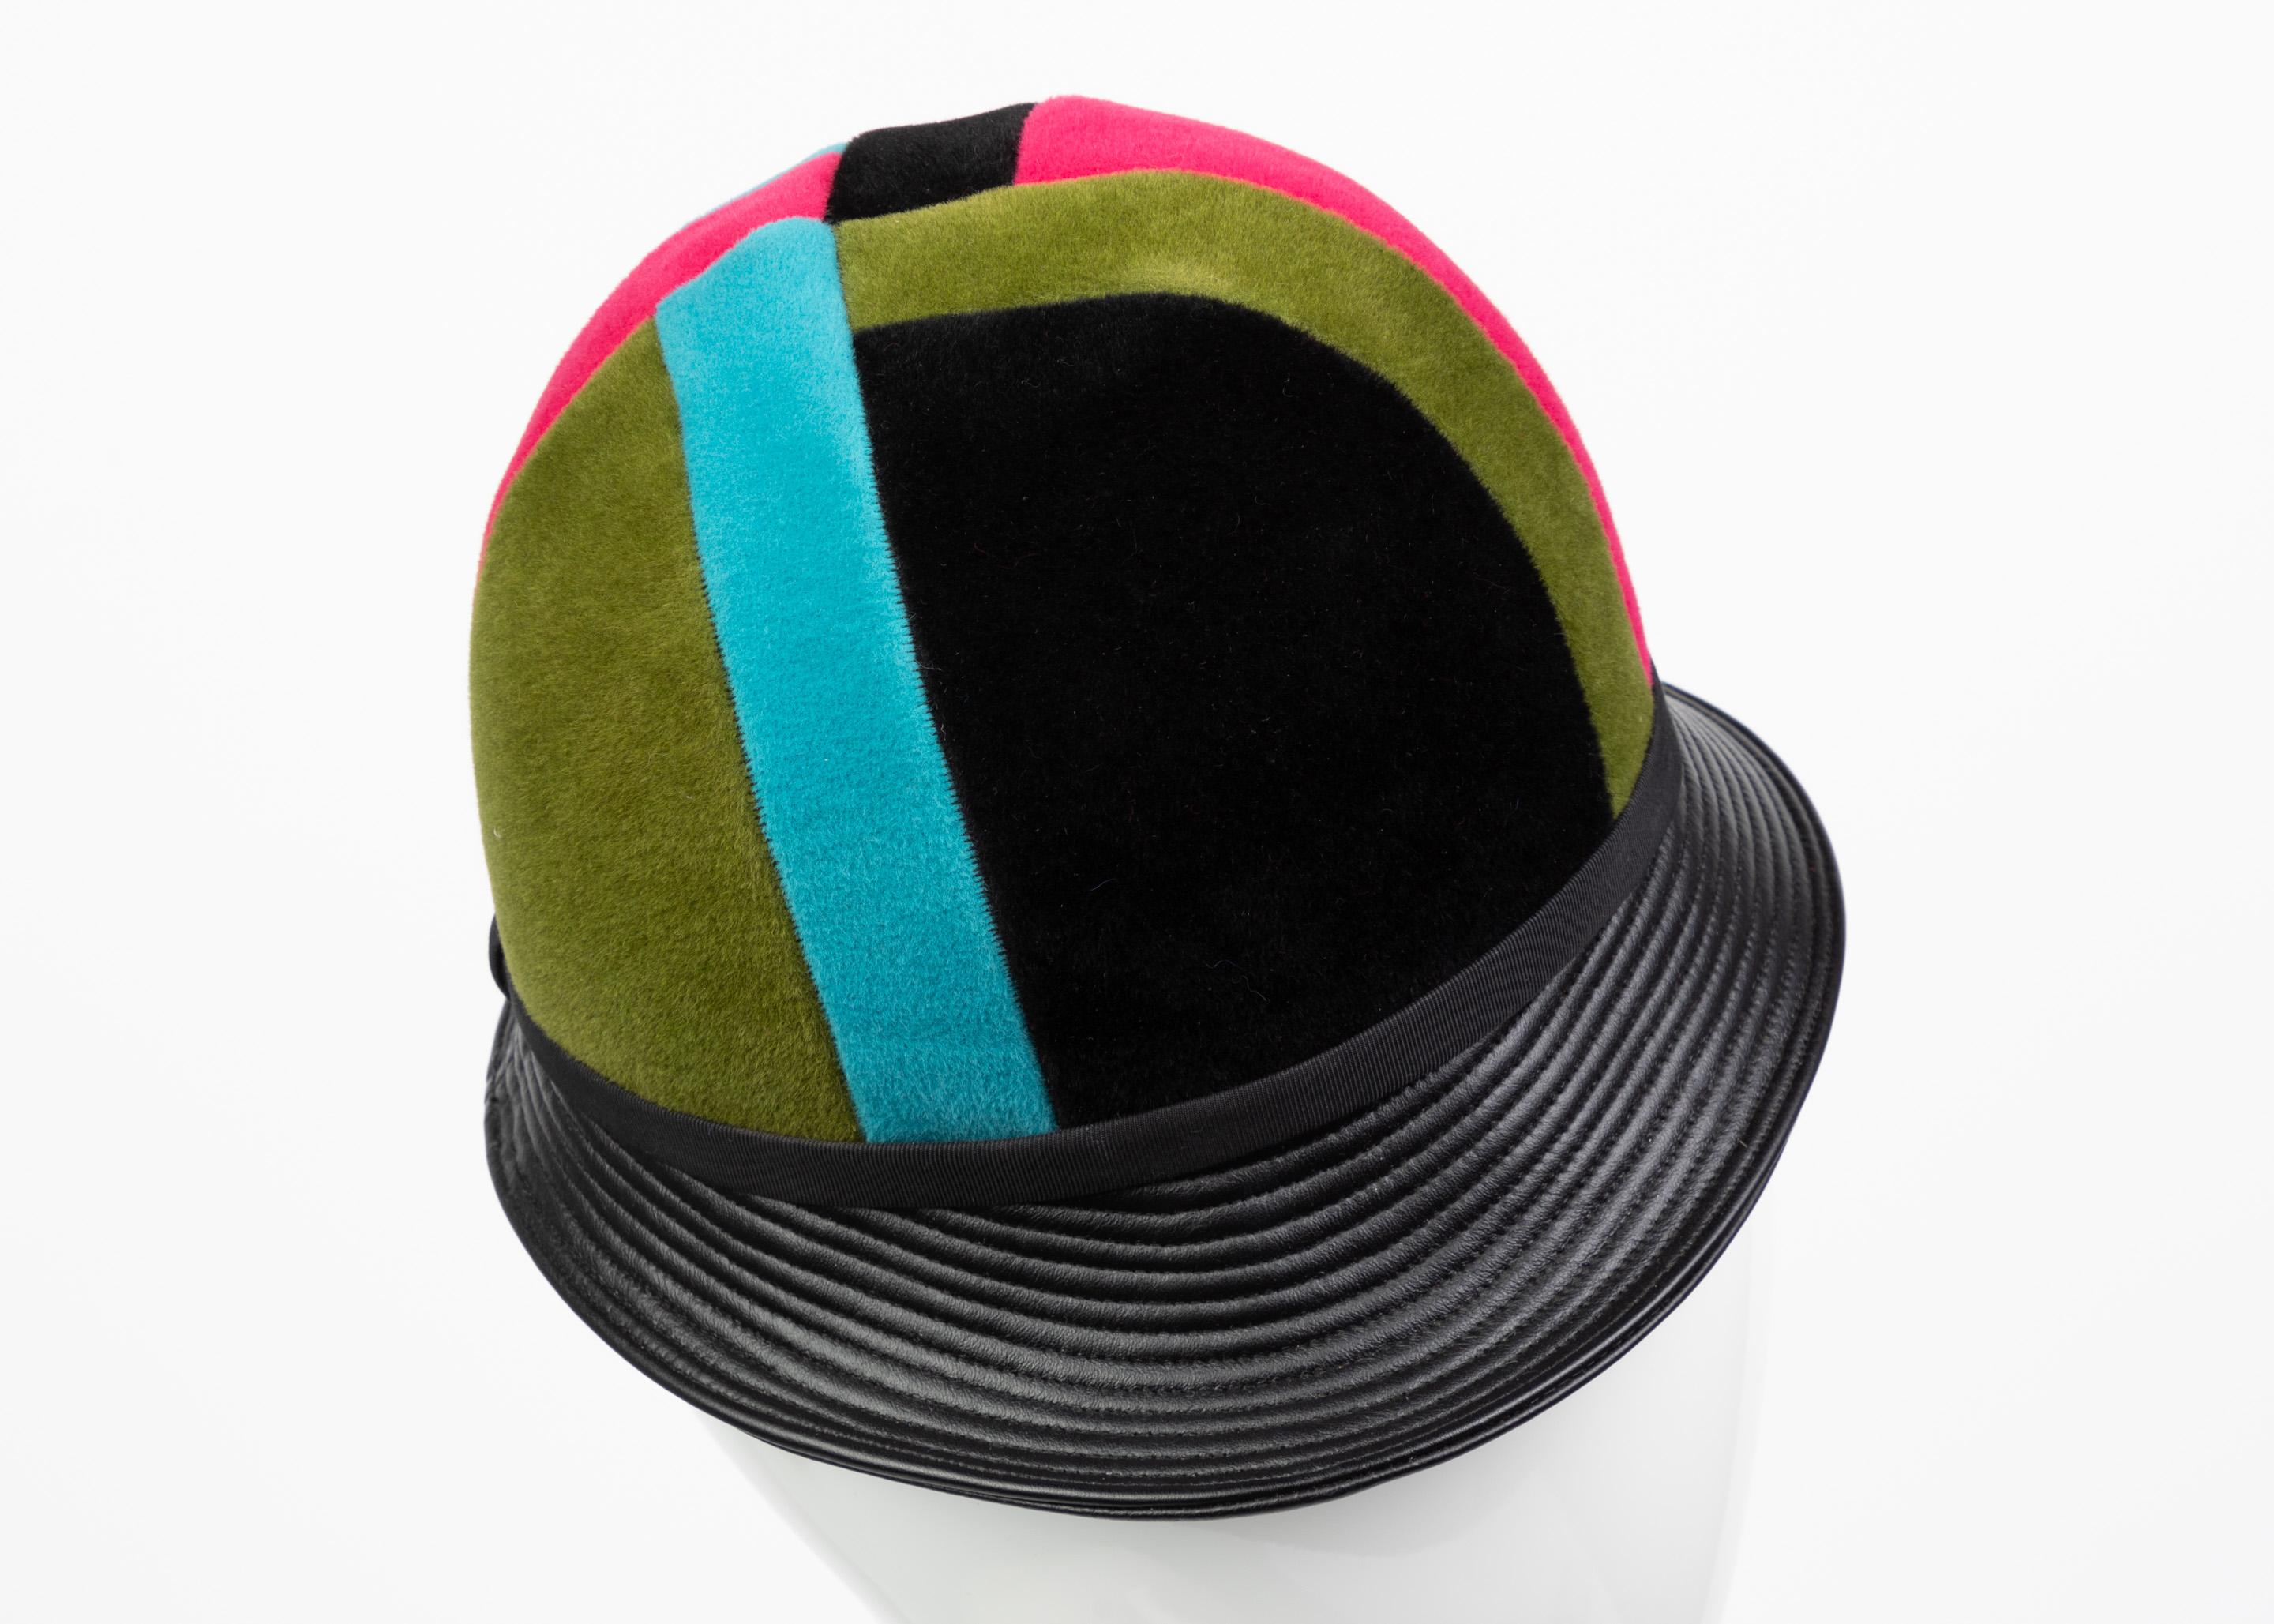 Yves Saint Laurent Rare Mondrian Color Block Helmet Hat YSL, 1965 In Good Condition For Sale In Boca Raton, FL